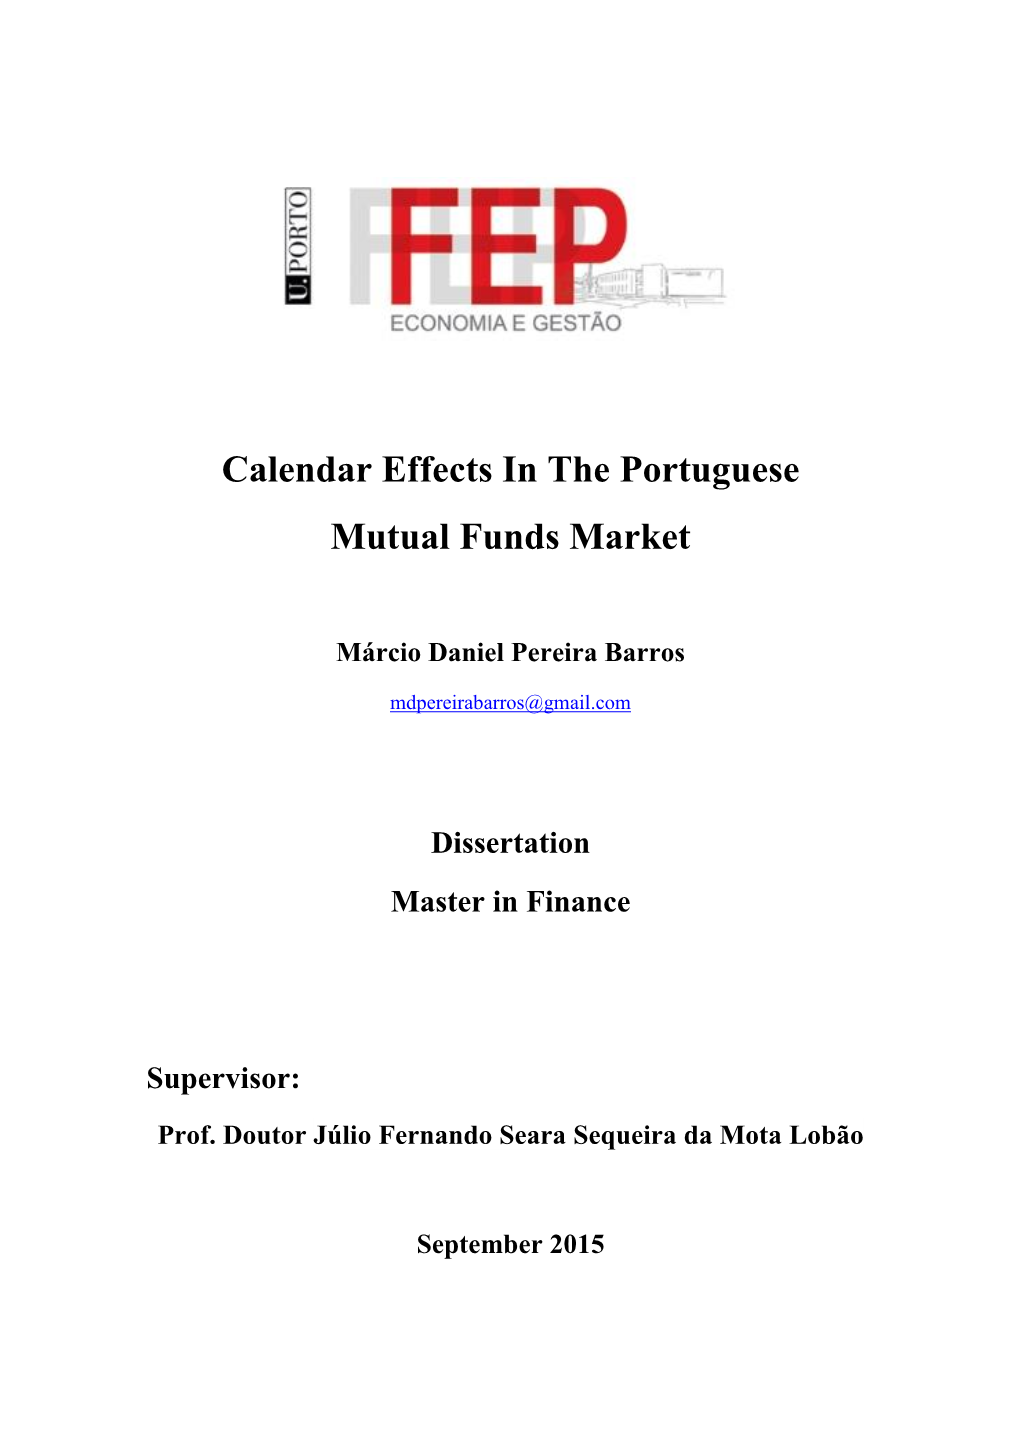 Calendar Effects in the Portuguese Mutual Funds Market